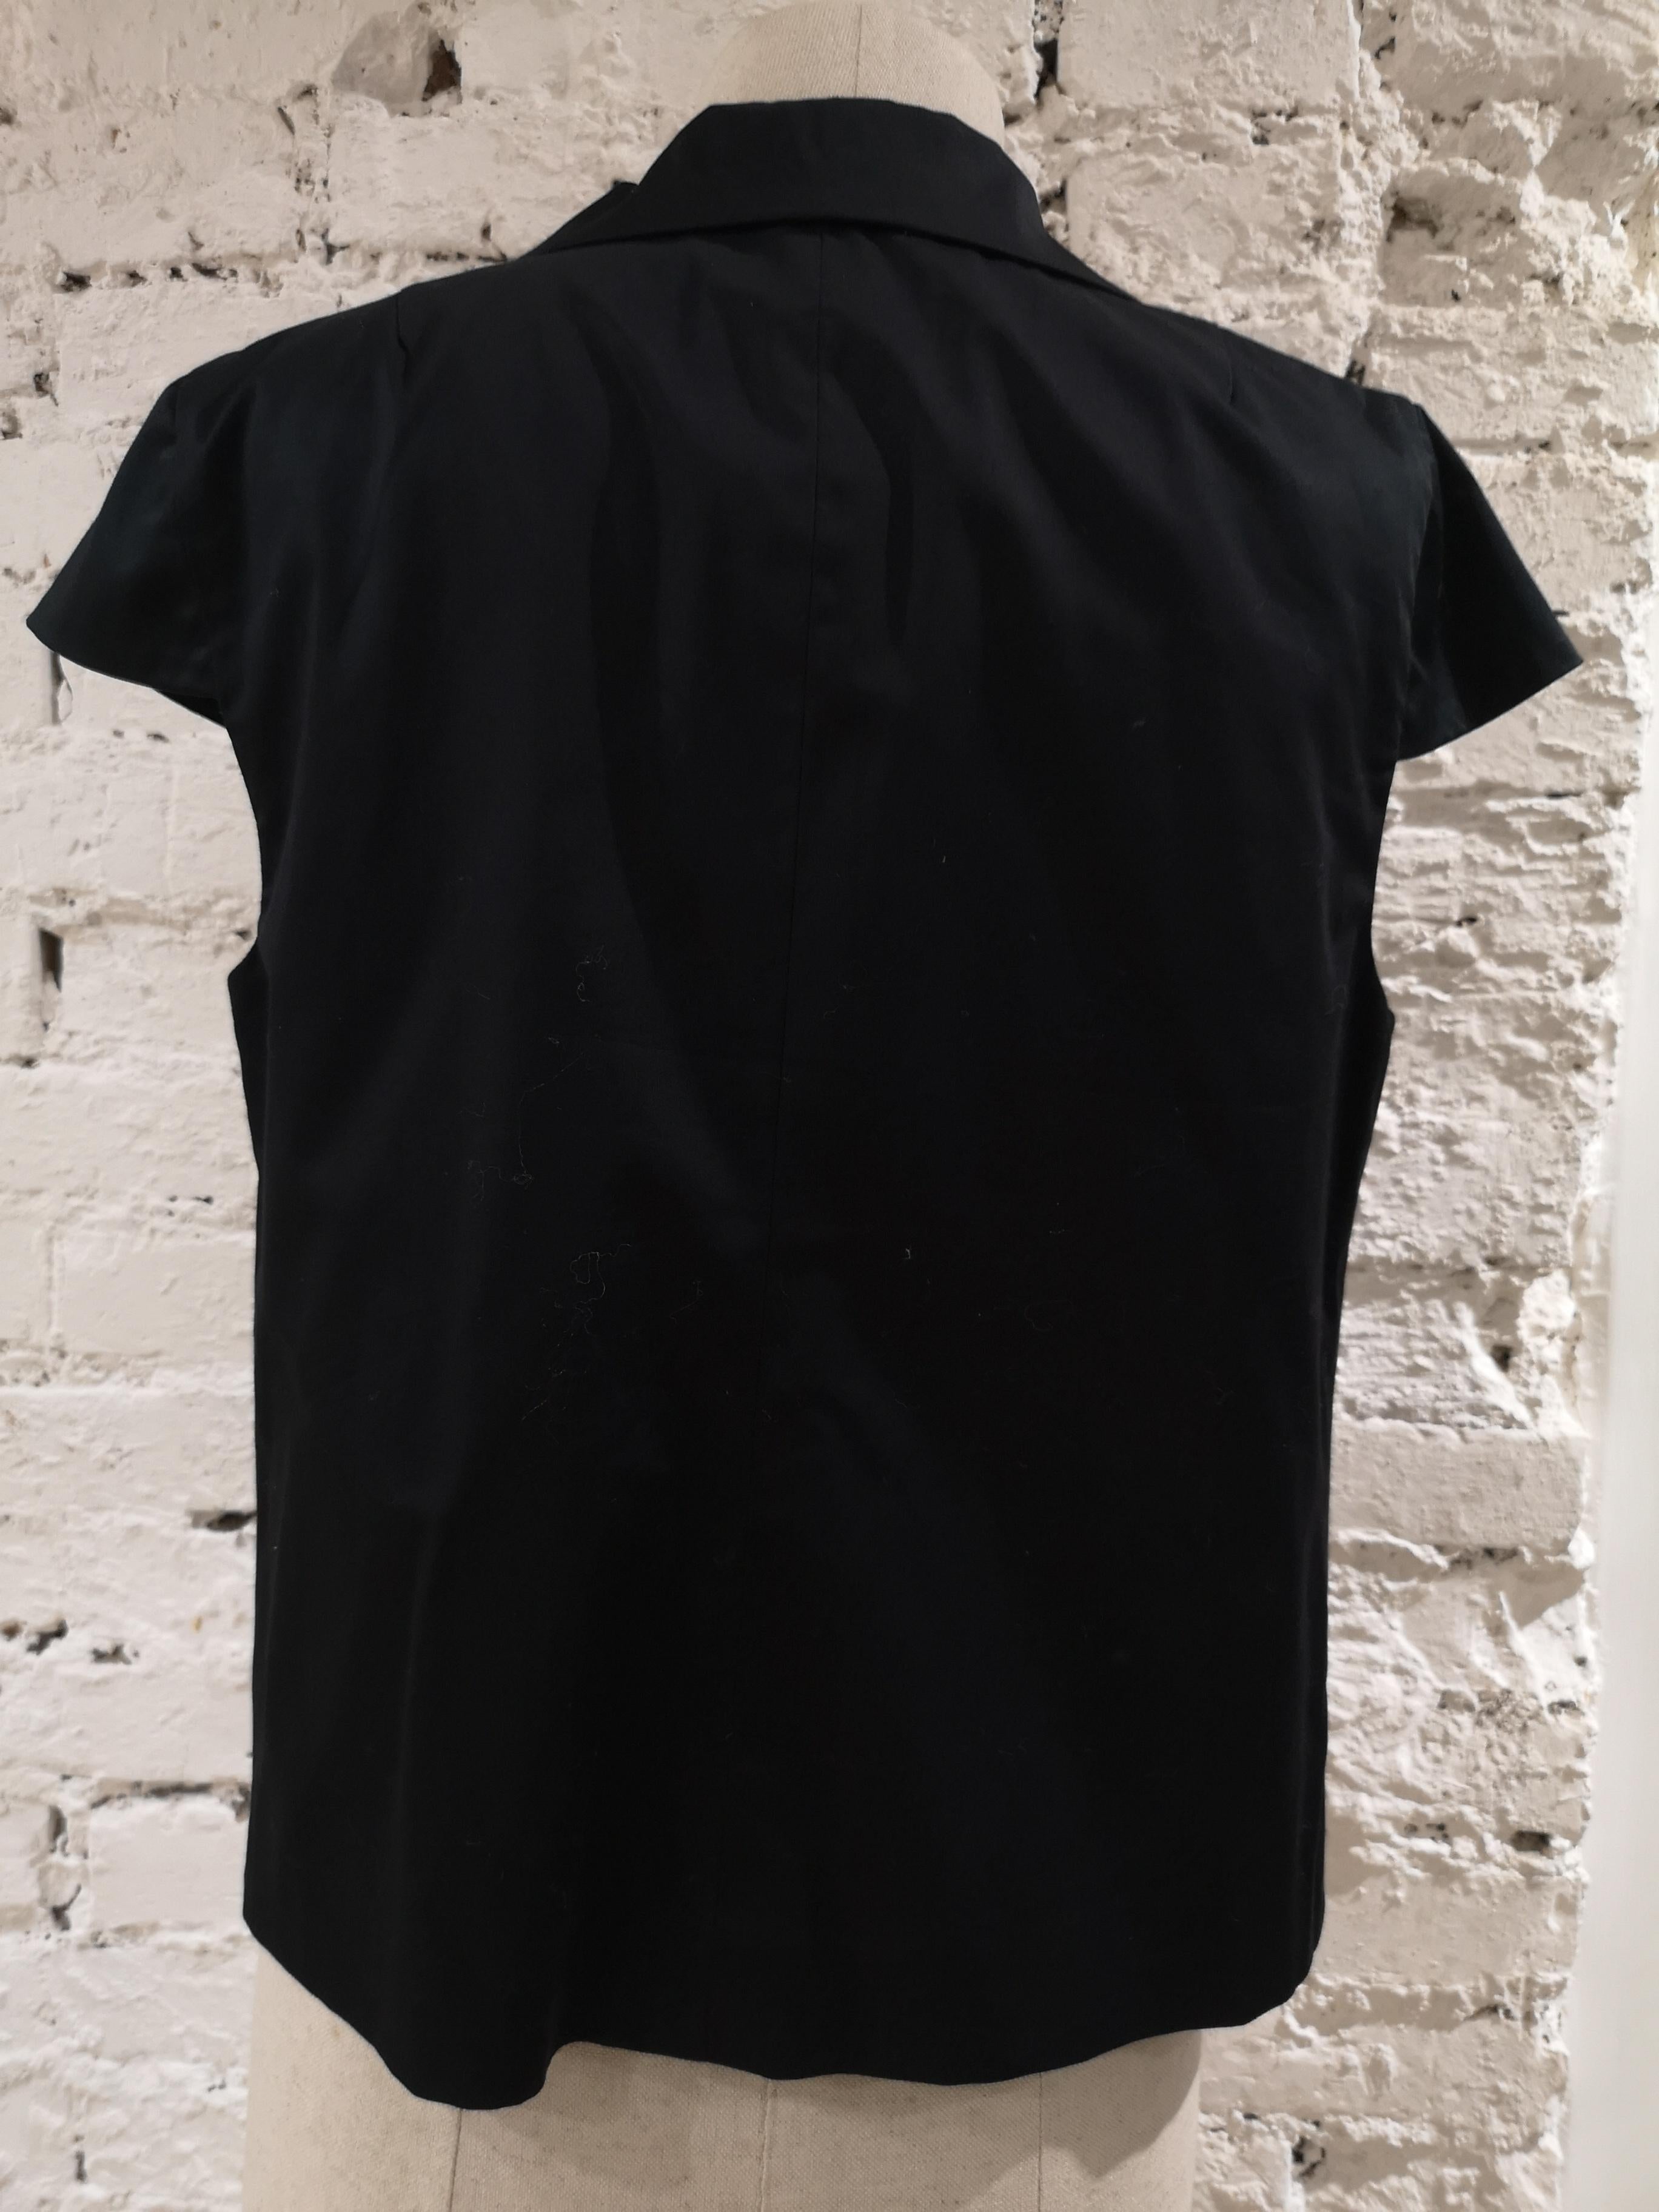 Women's L'Autre Chose black shirt - sleeveless jacket